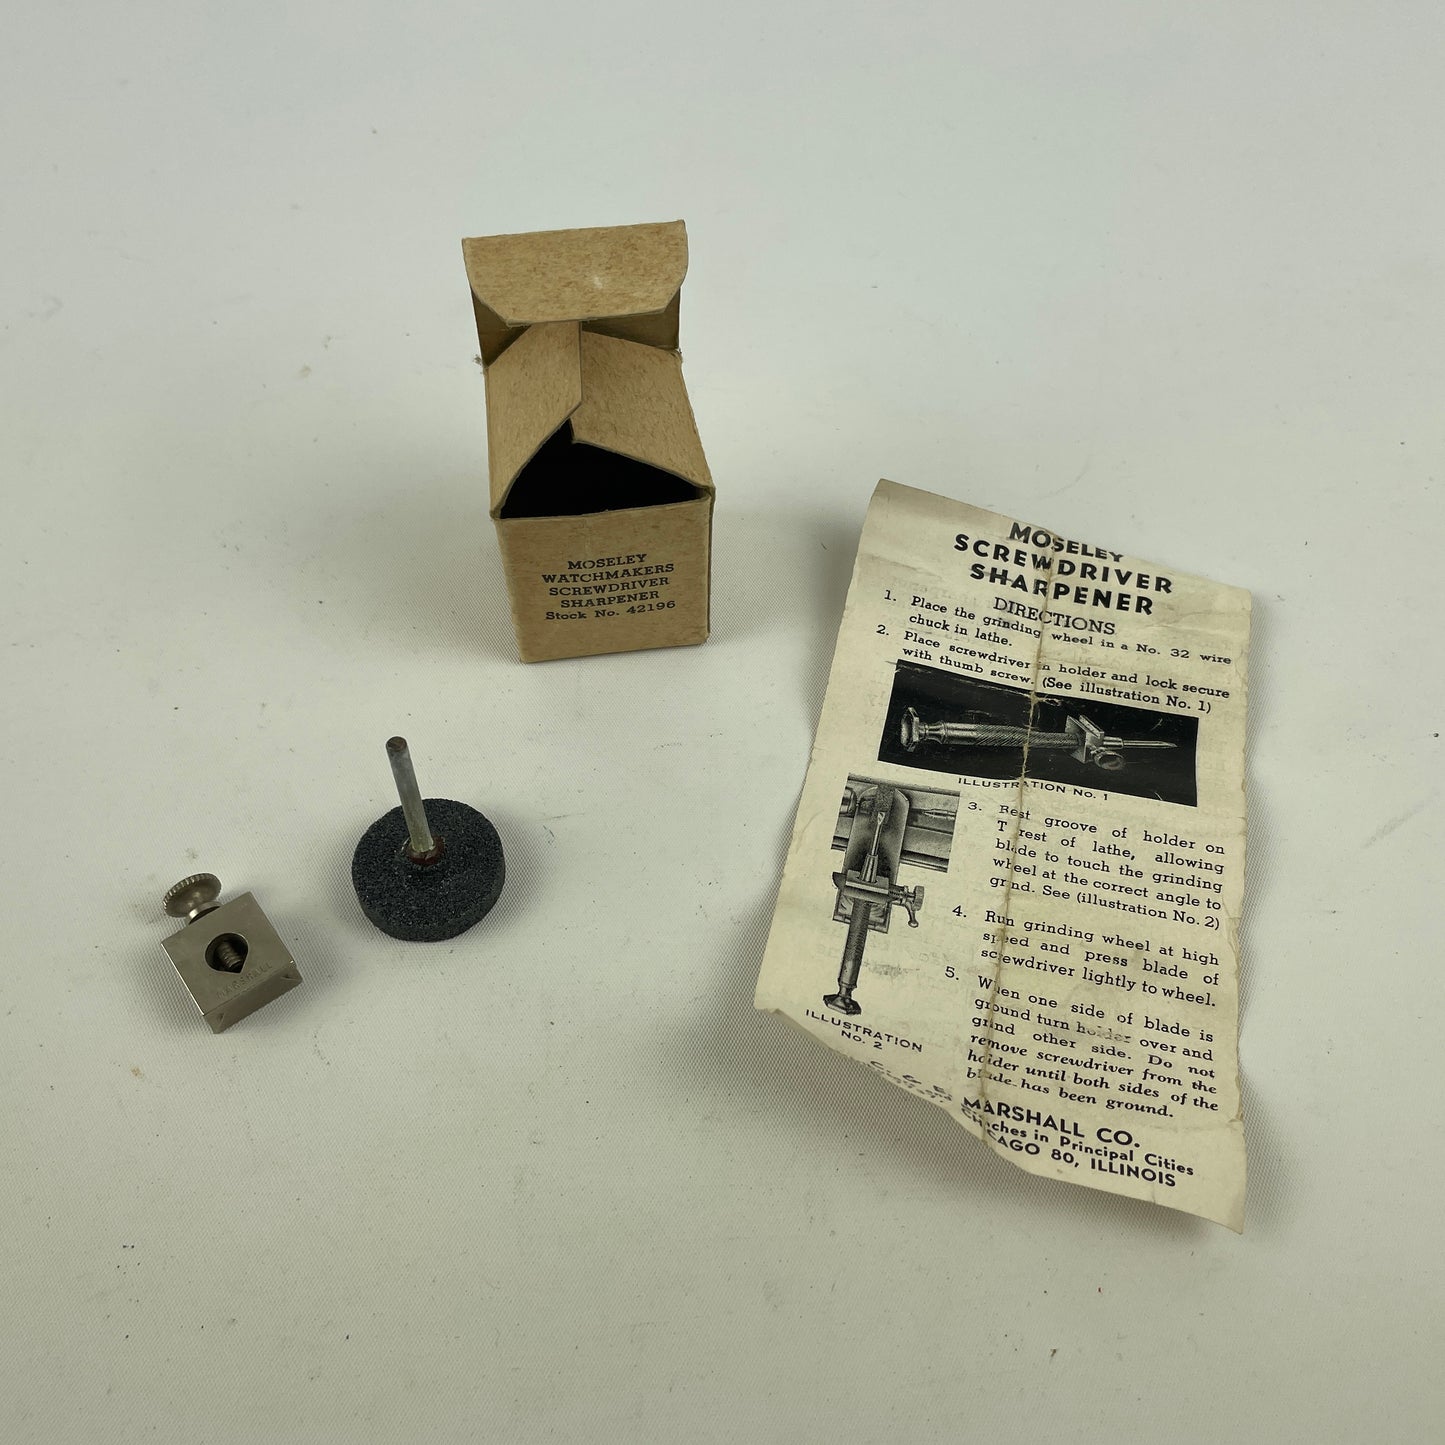 Feb Lot 56- Moseley Boxed No. 42196 Watchmaker’s Screwdriver Sharpener